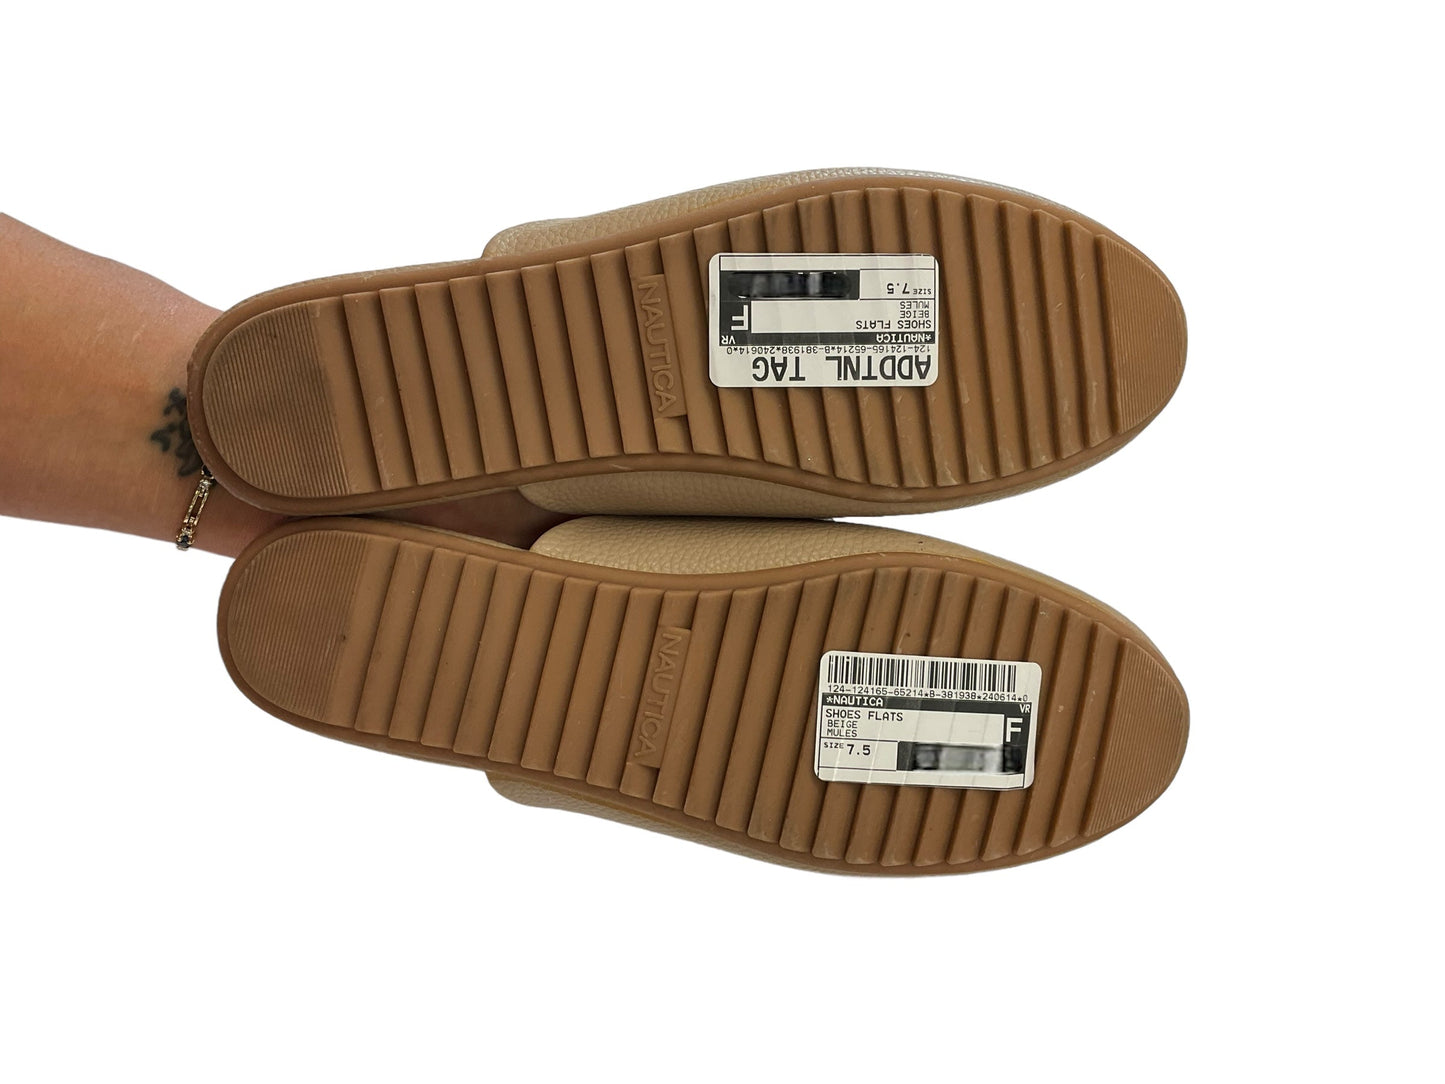 Beige Shoes Flats Nautica, Size 7.5